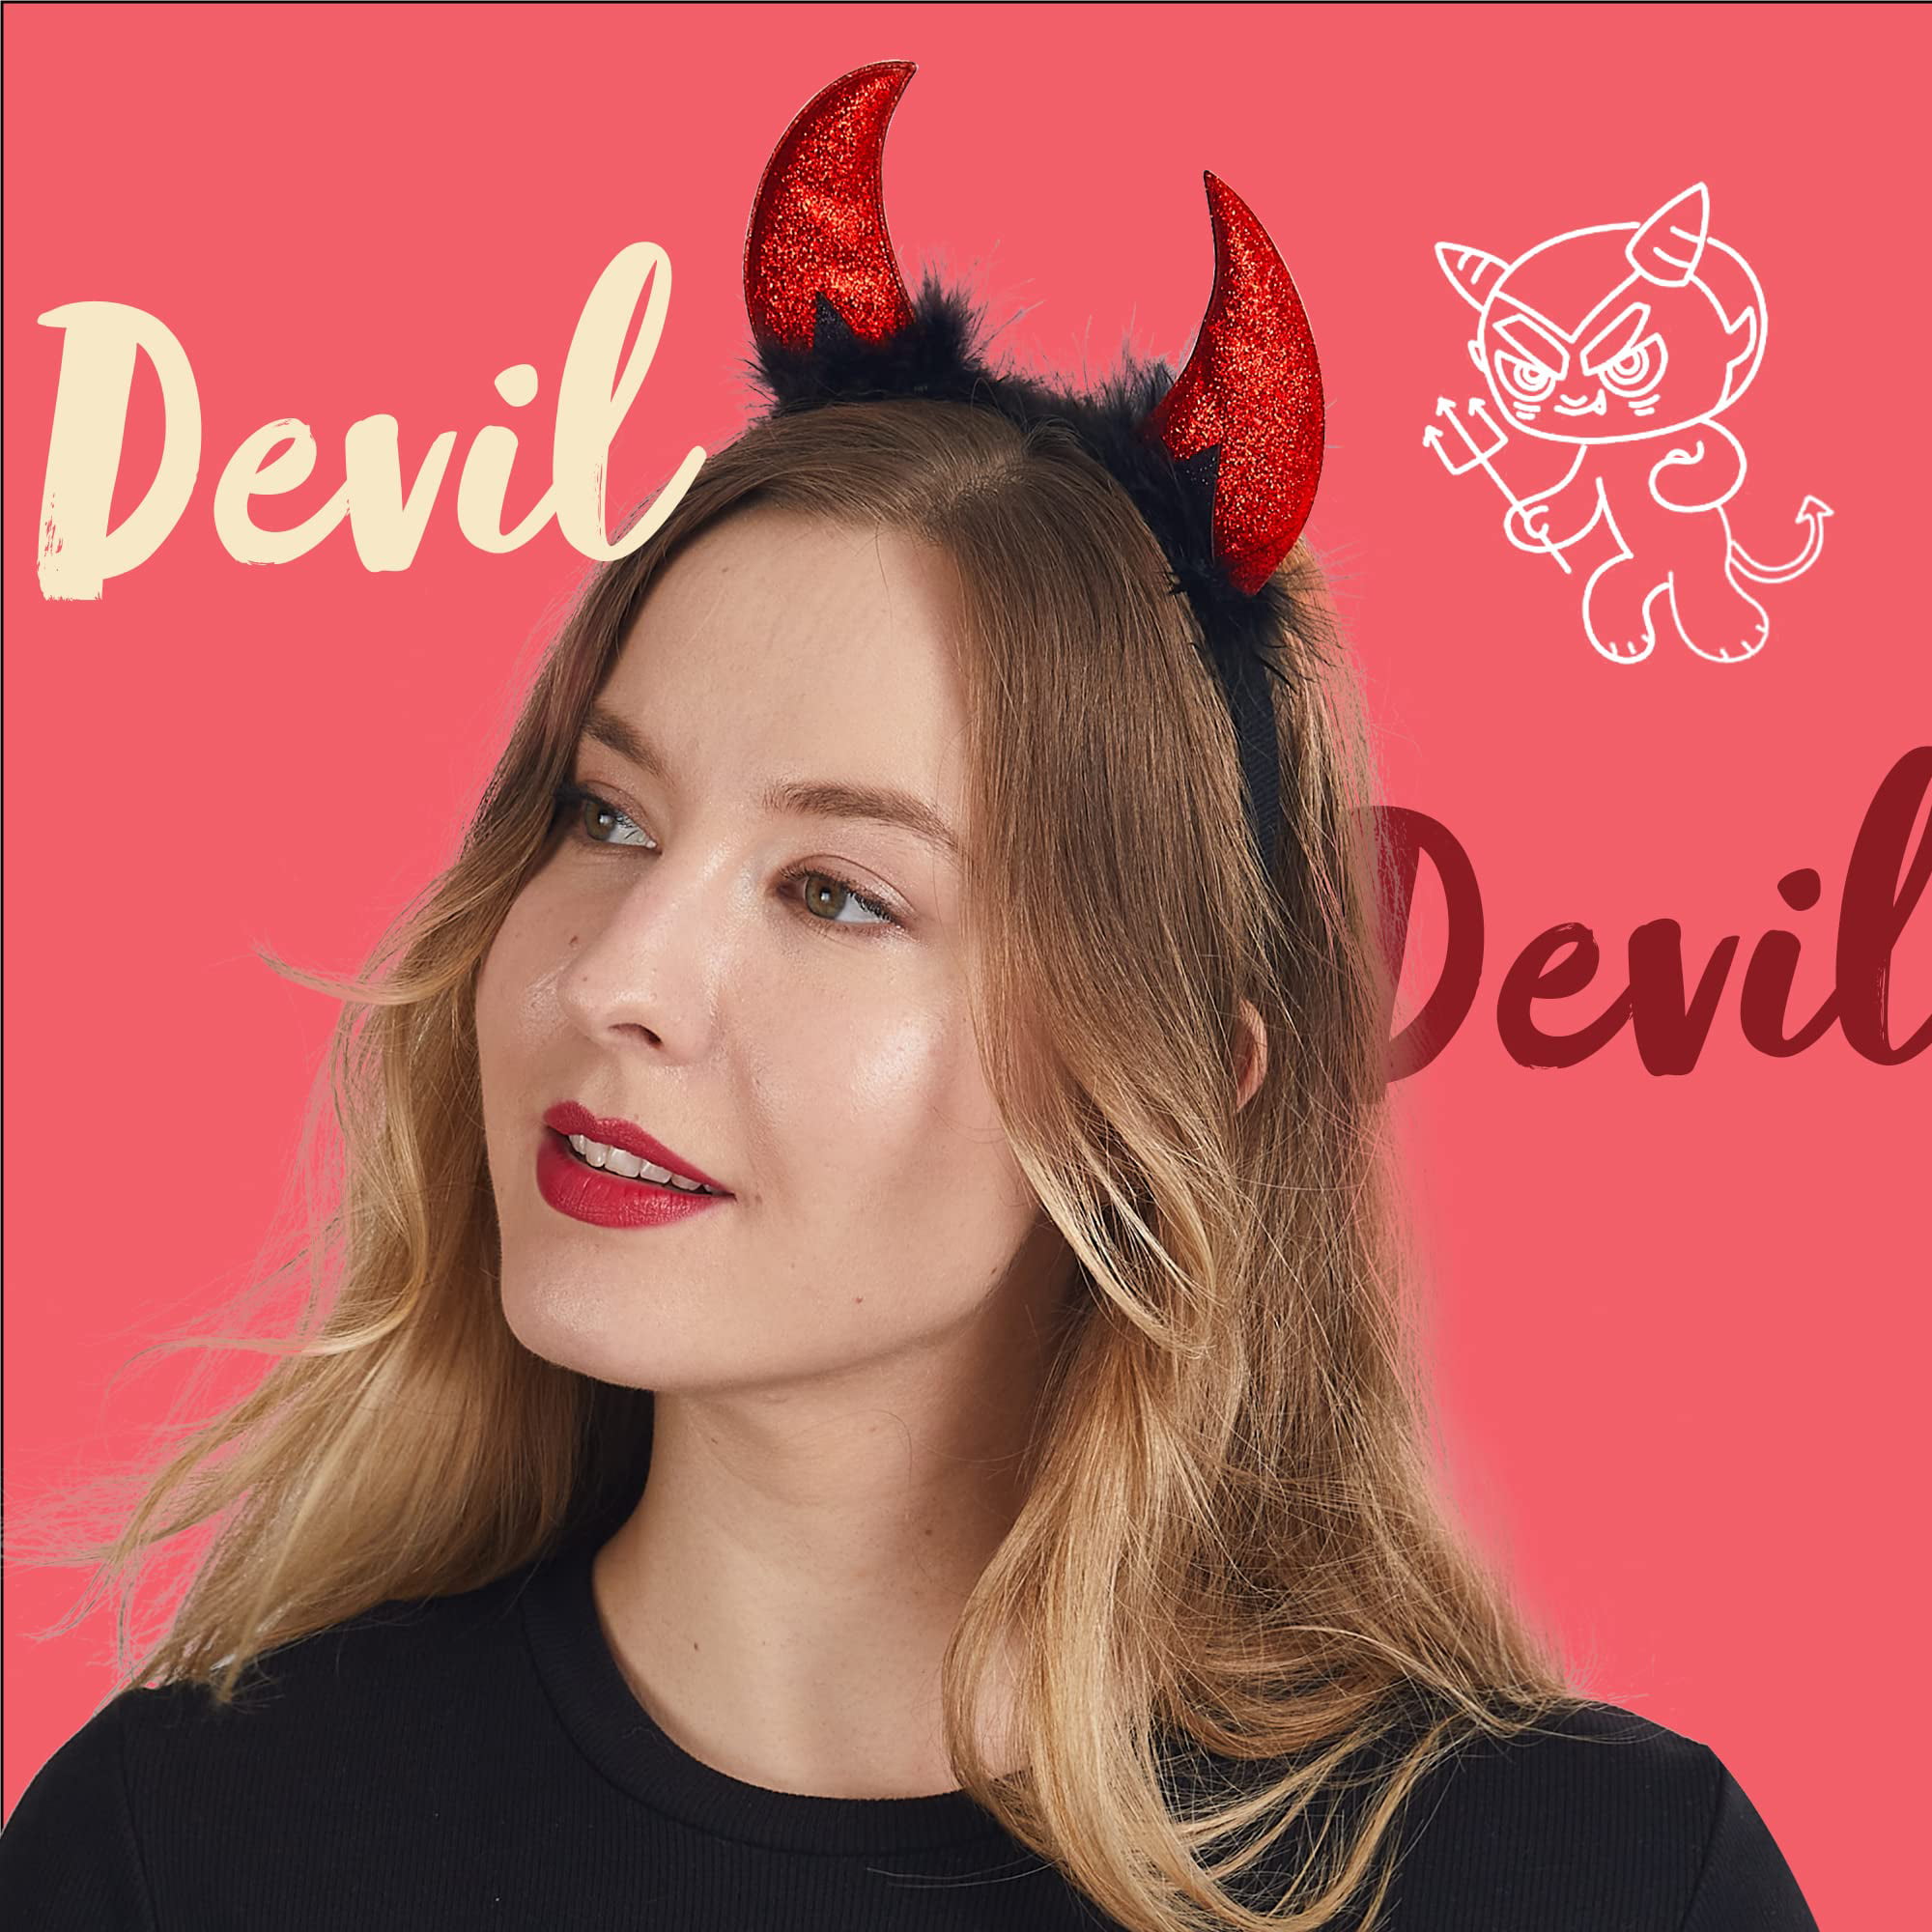 Devil Horns Headband Red - Champion Party Supply